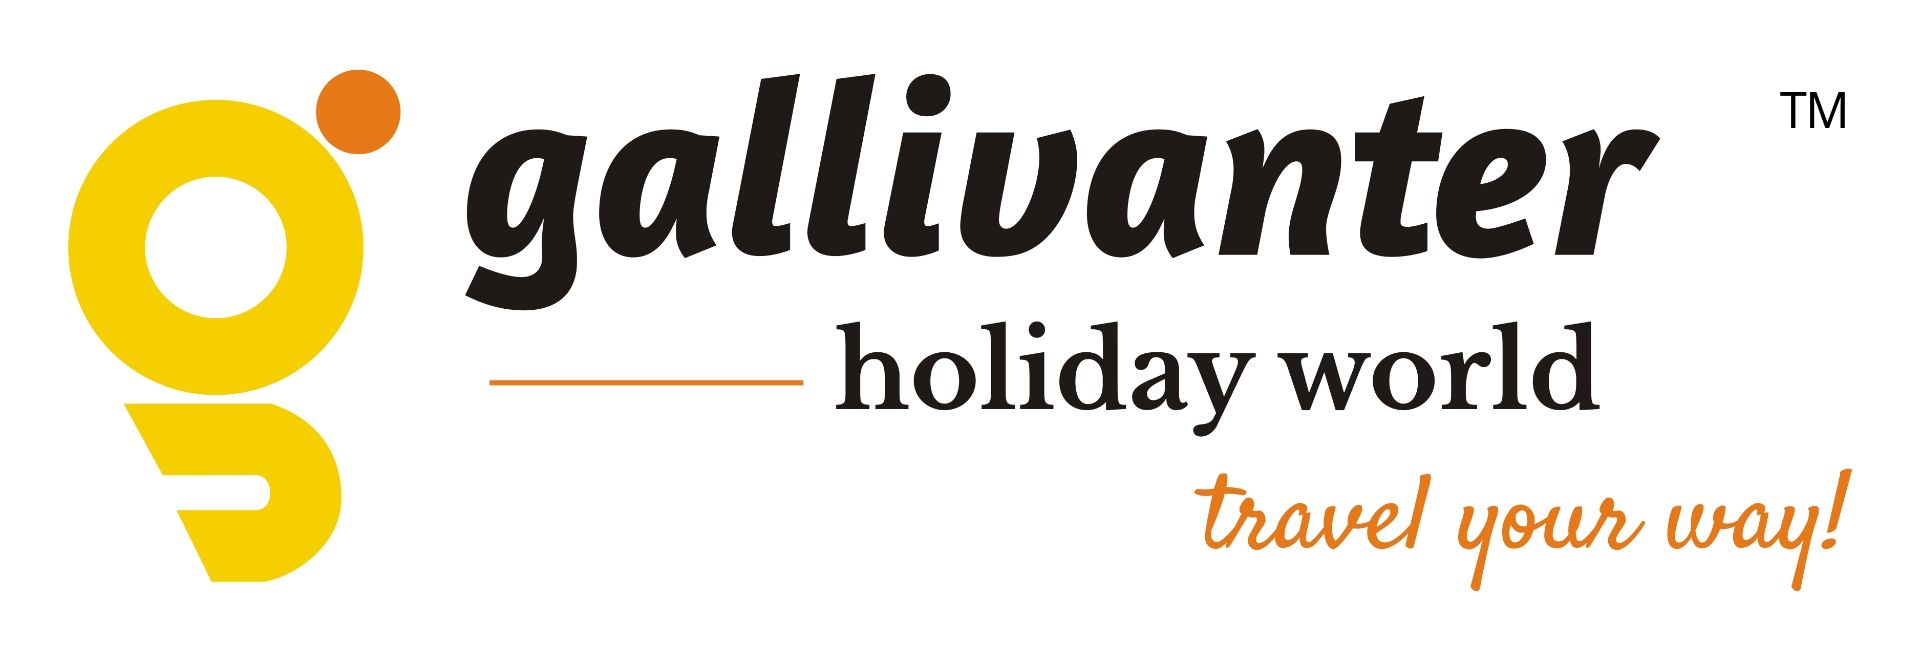 Gallivanter Holiday World Pvt Ltd